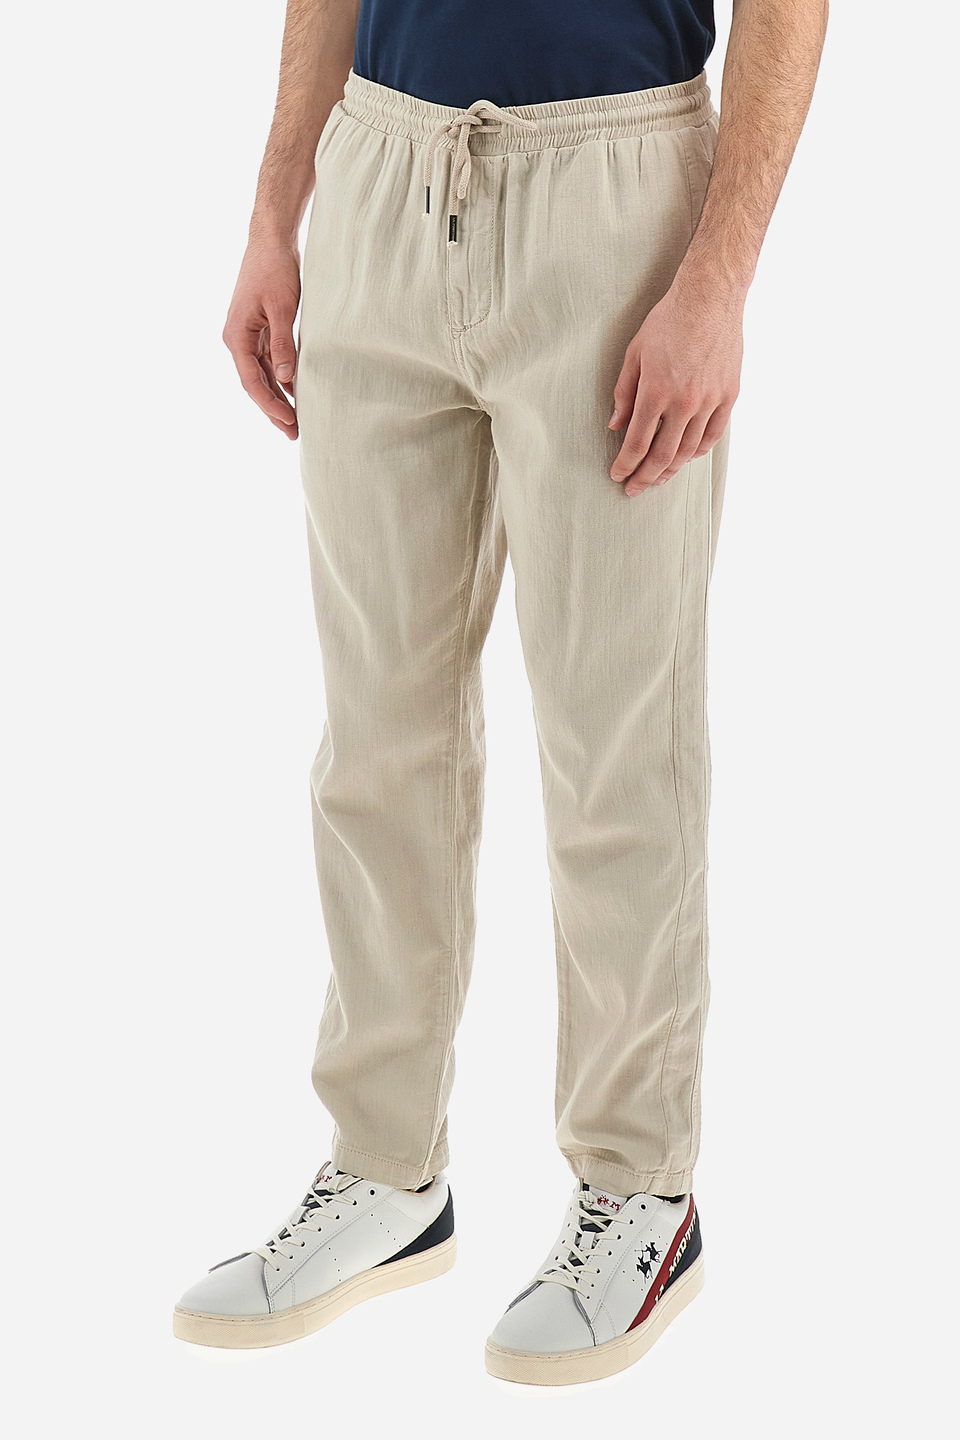 Men Trousers Online | Formal Pants For Men Online